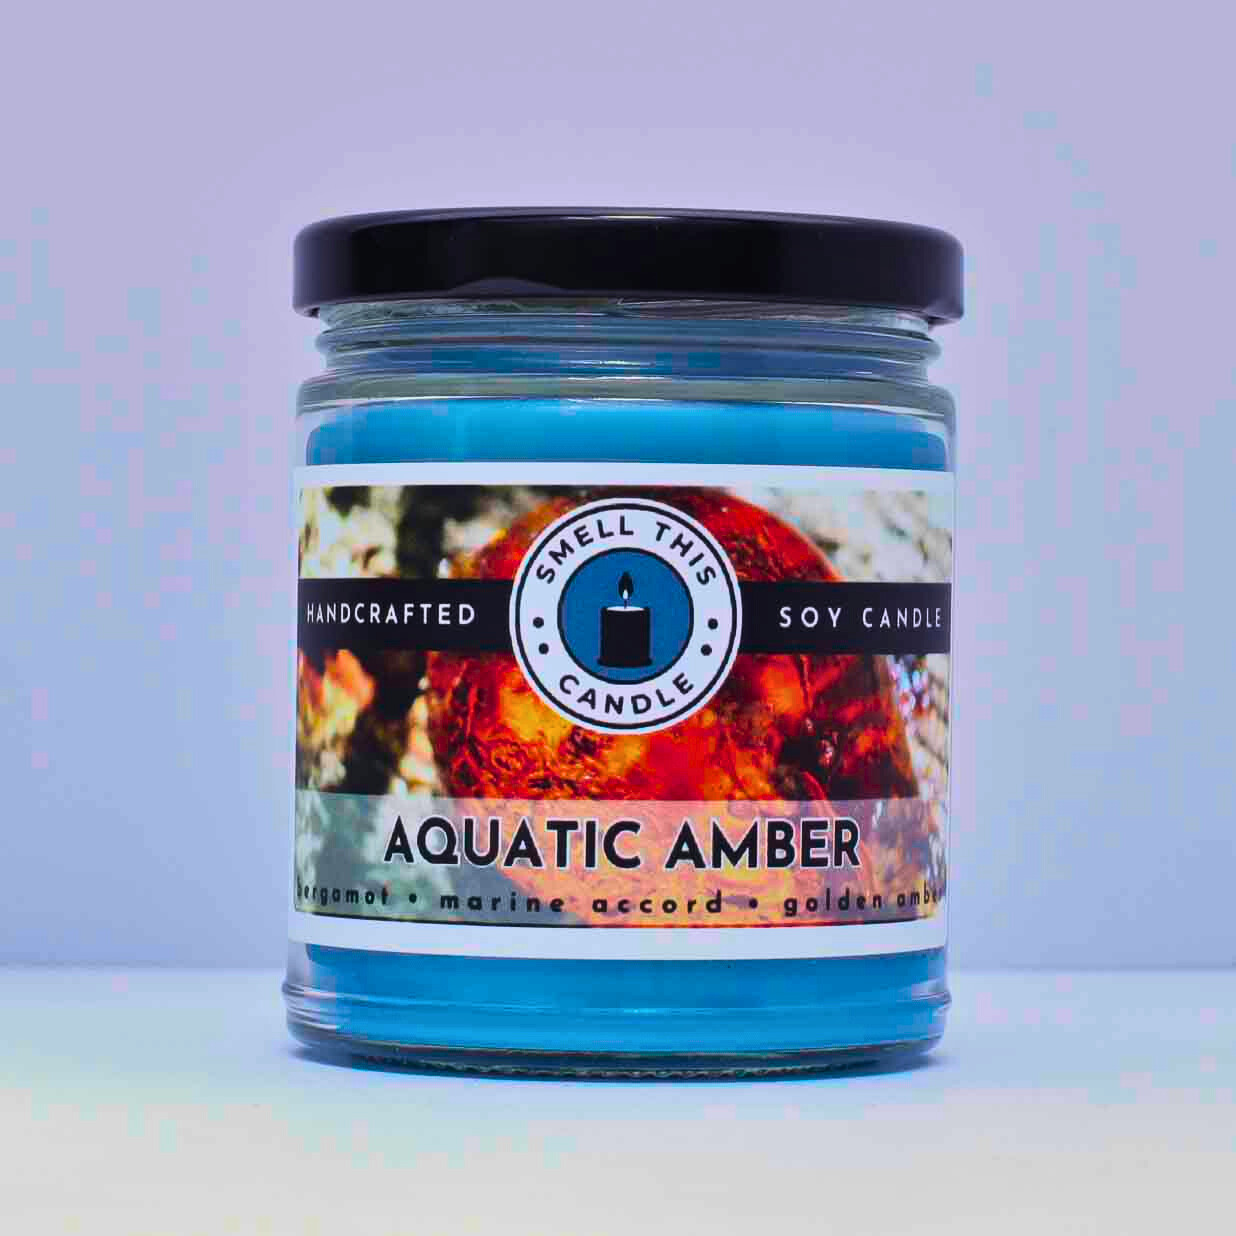 Aquatic Amber candle